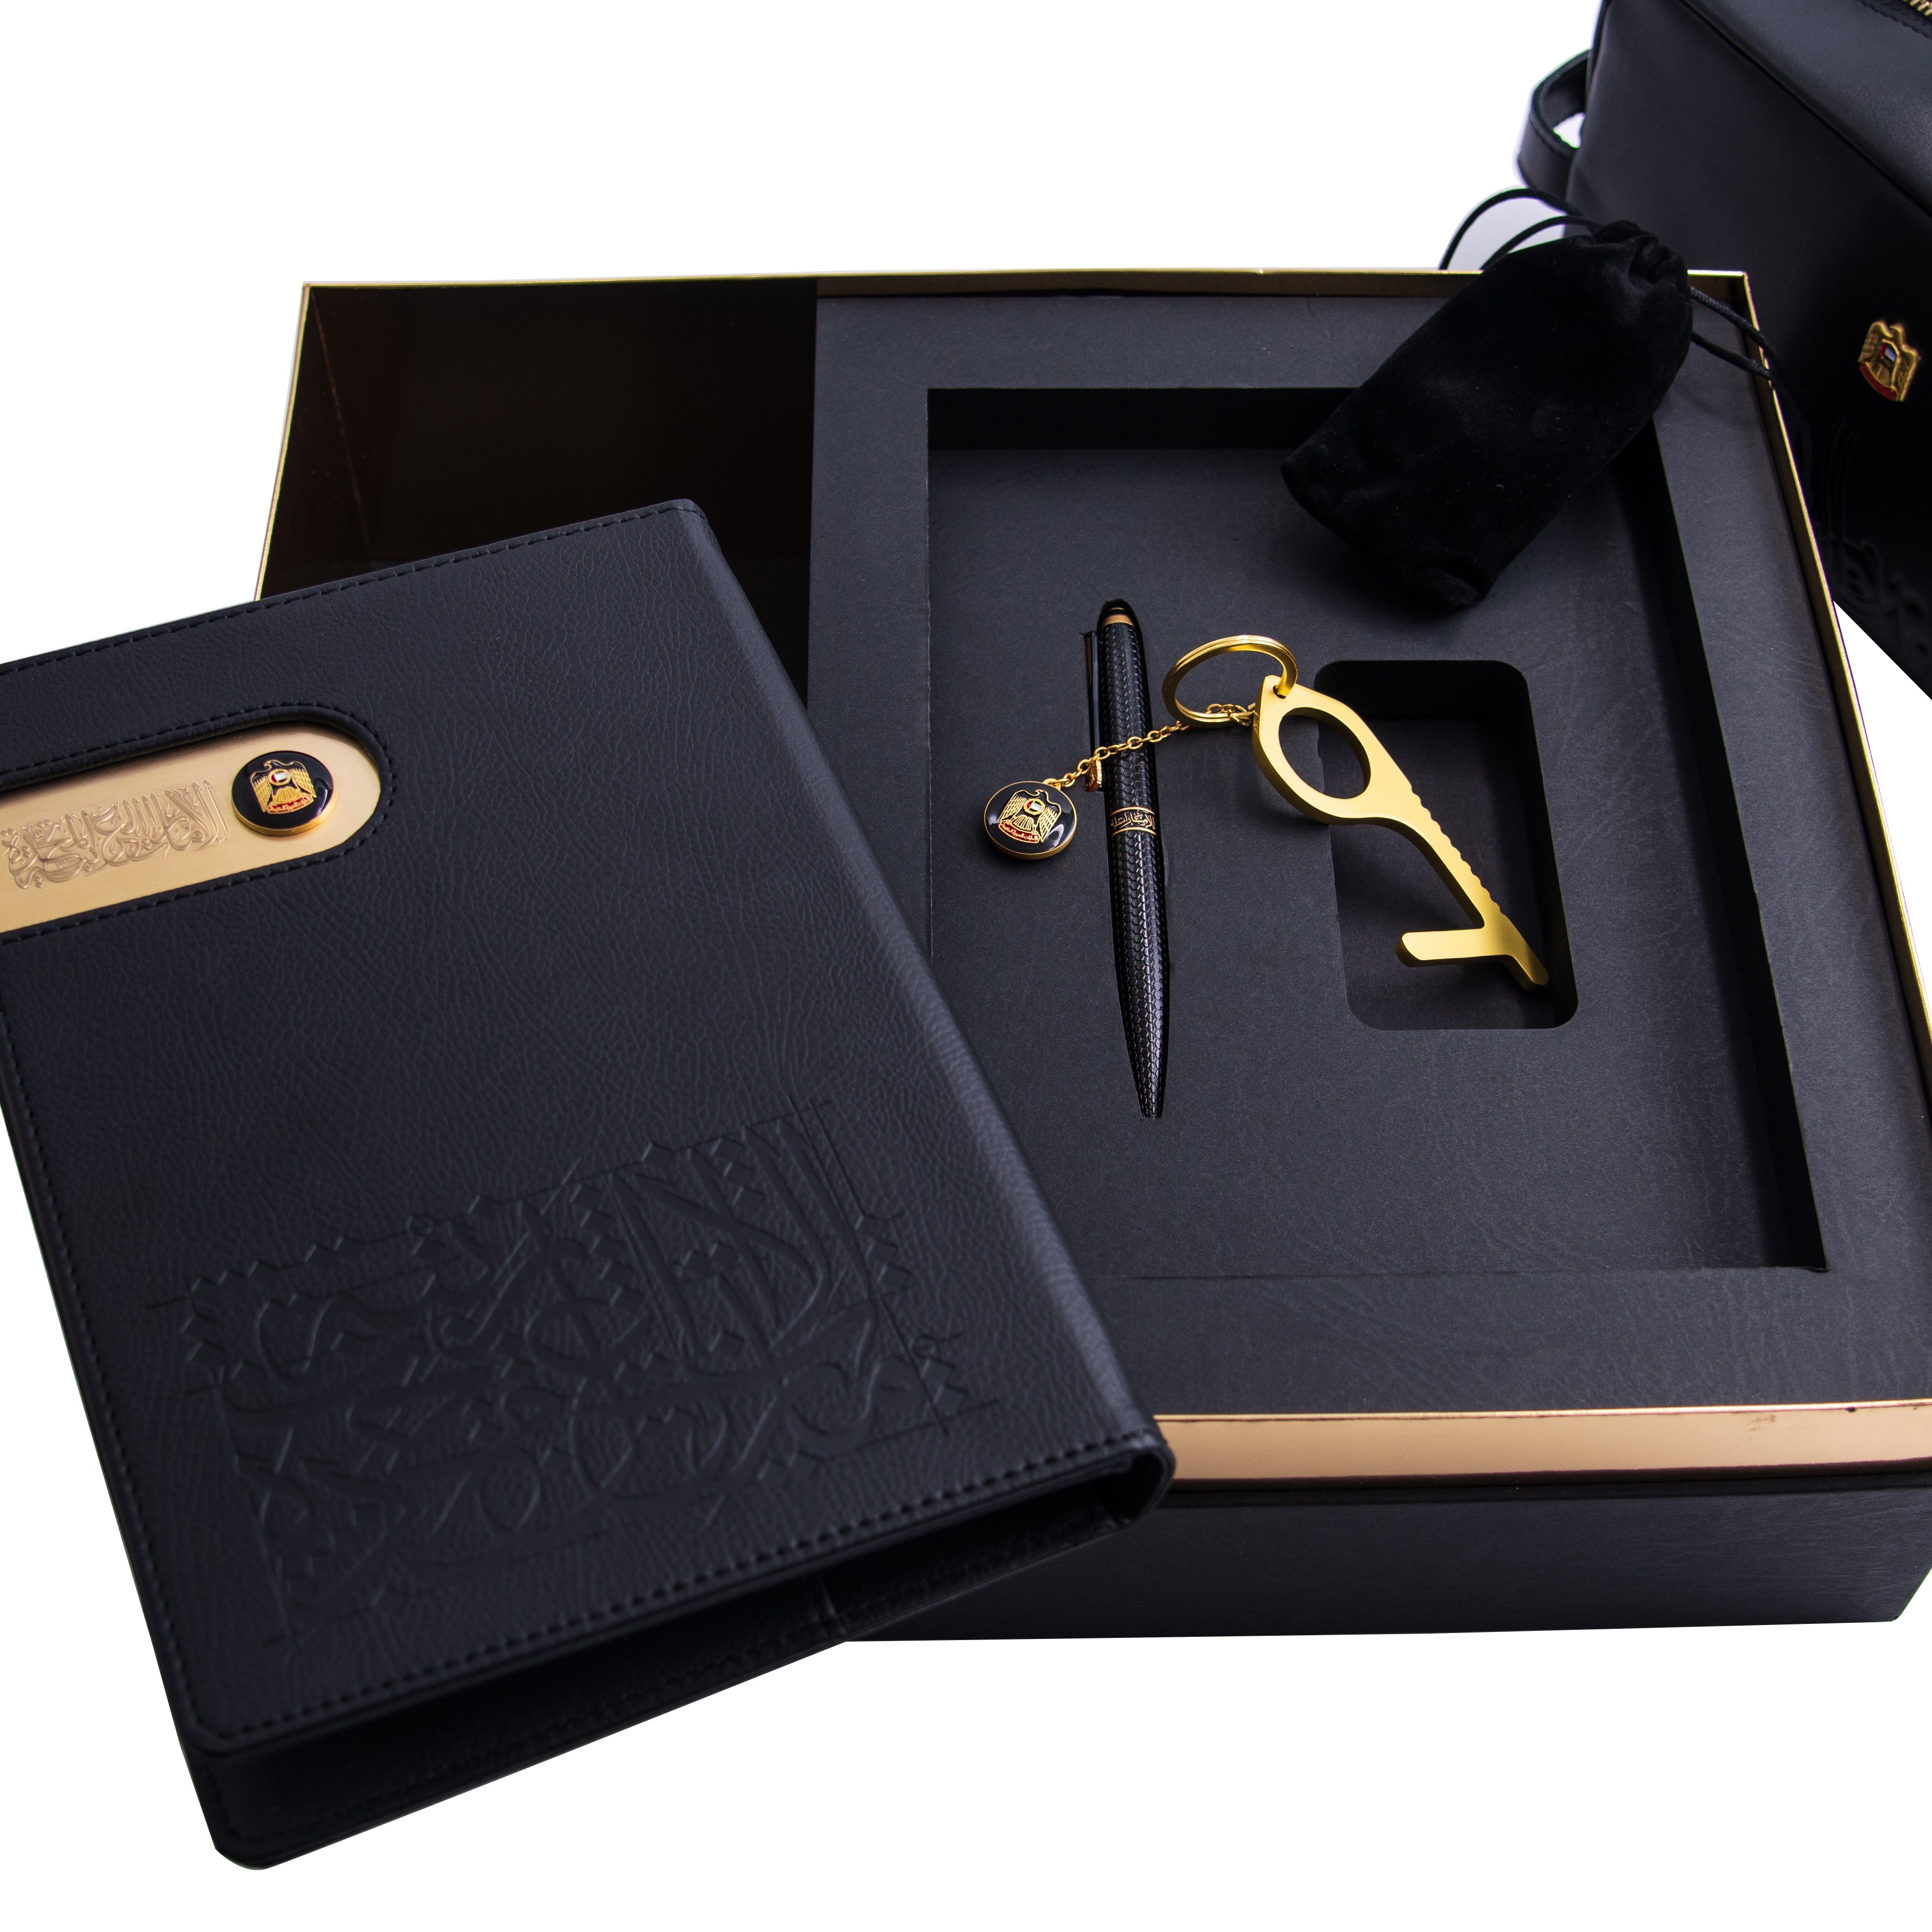 VIP Box-UAE-Black | gift ideas dubai | gifts for men